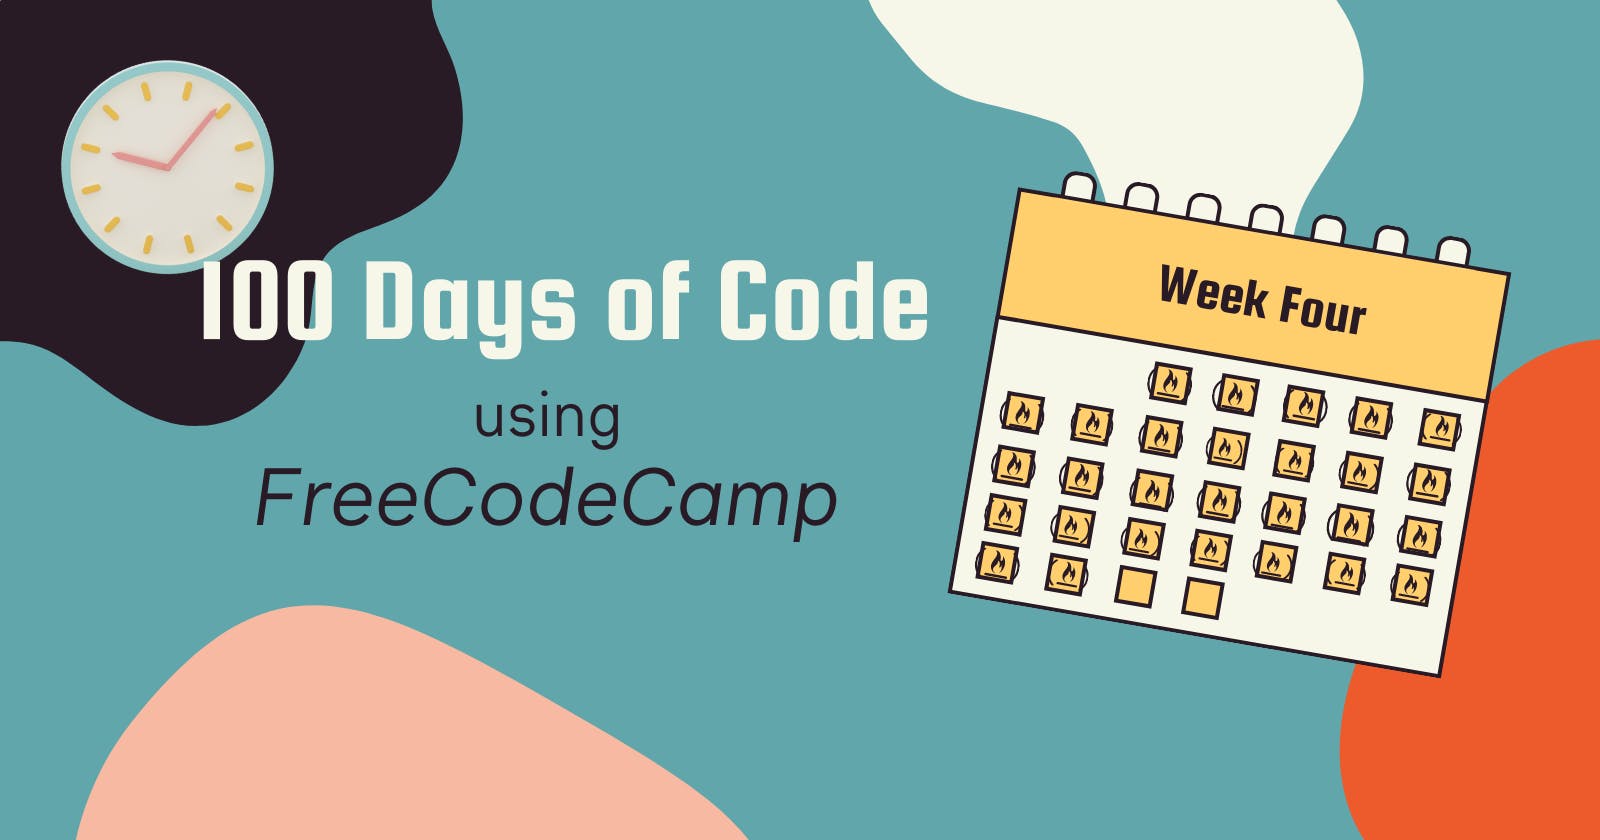 100DaysOfCode using FreeCodeCamp - Week 4